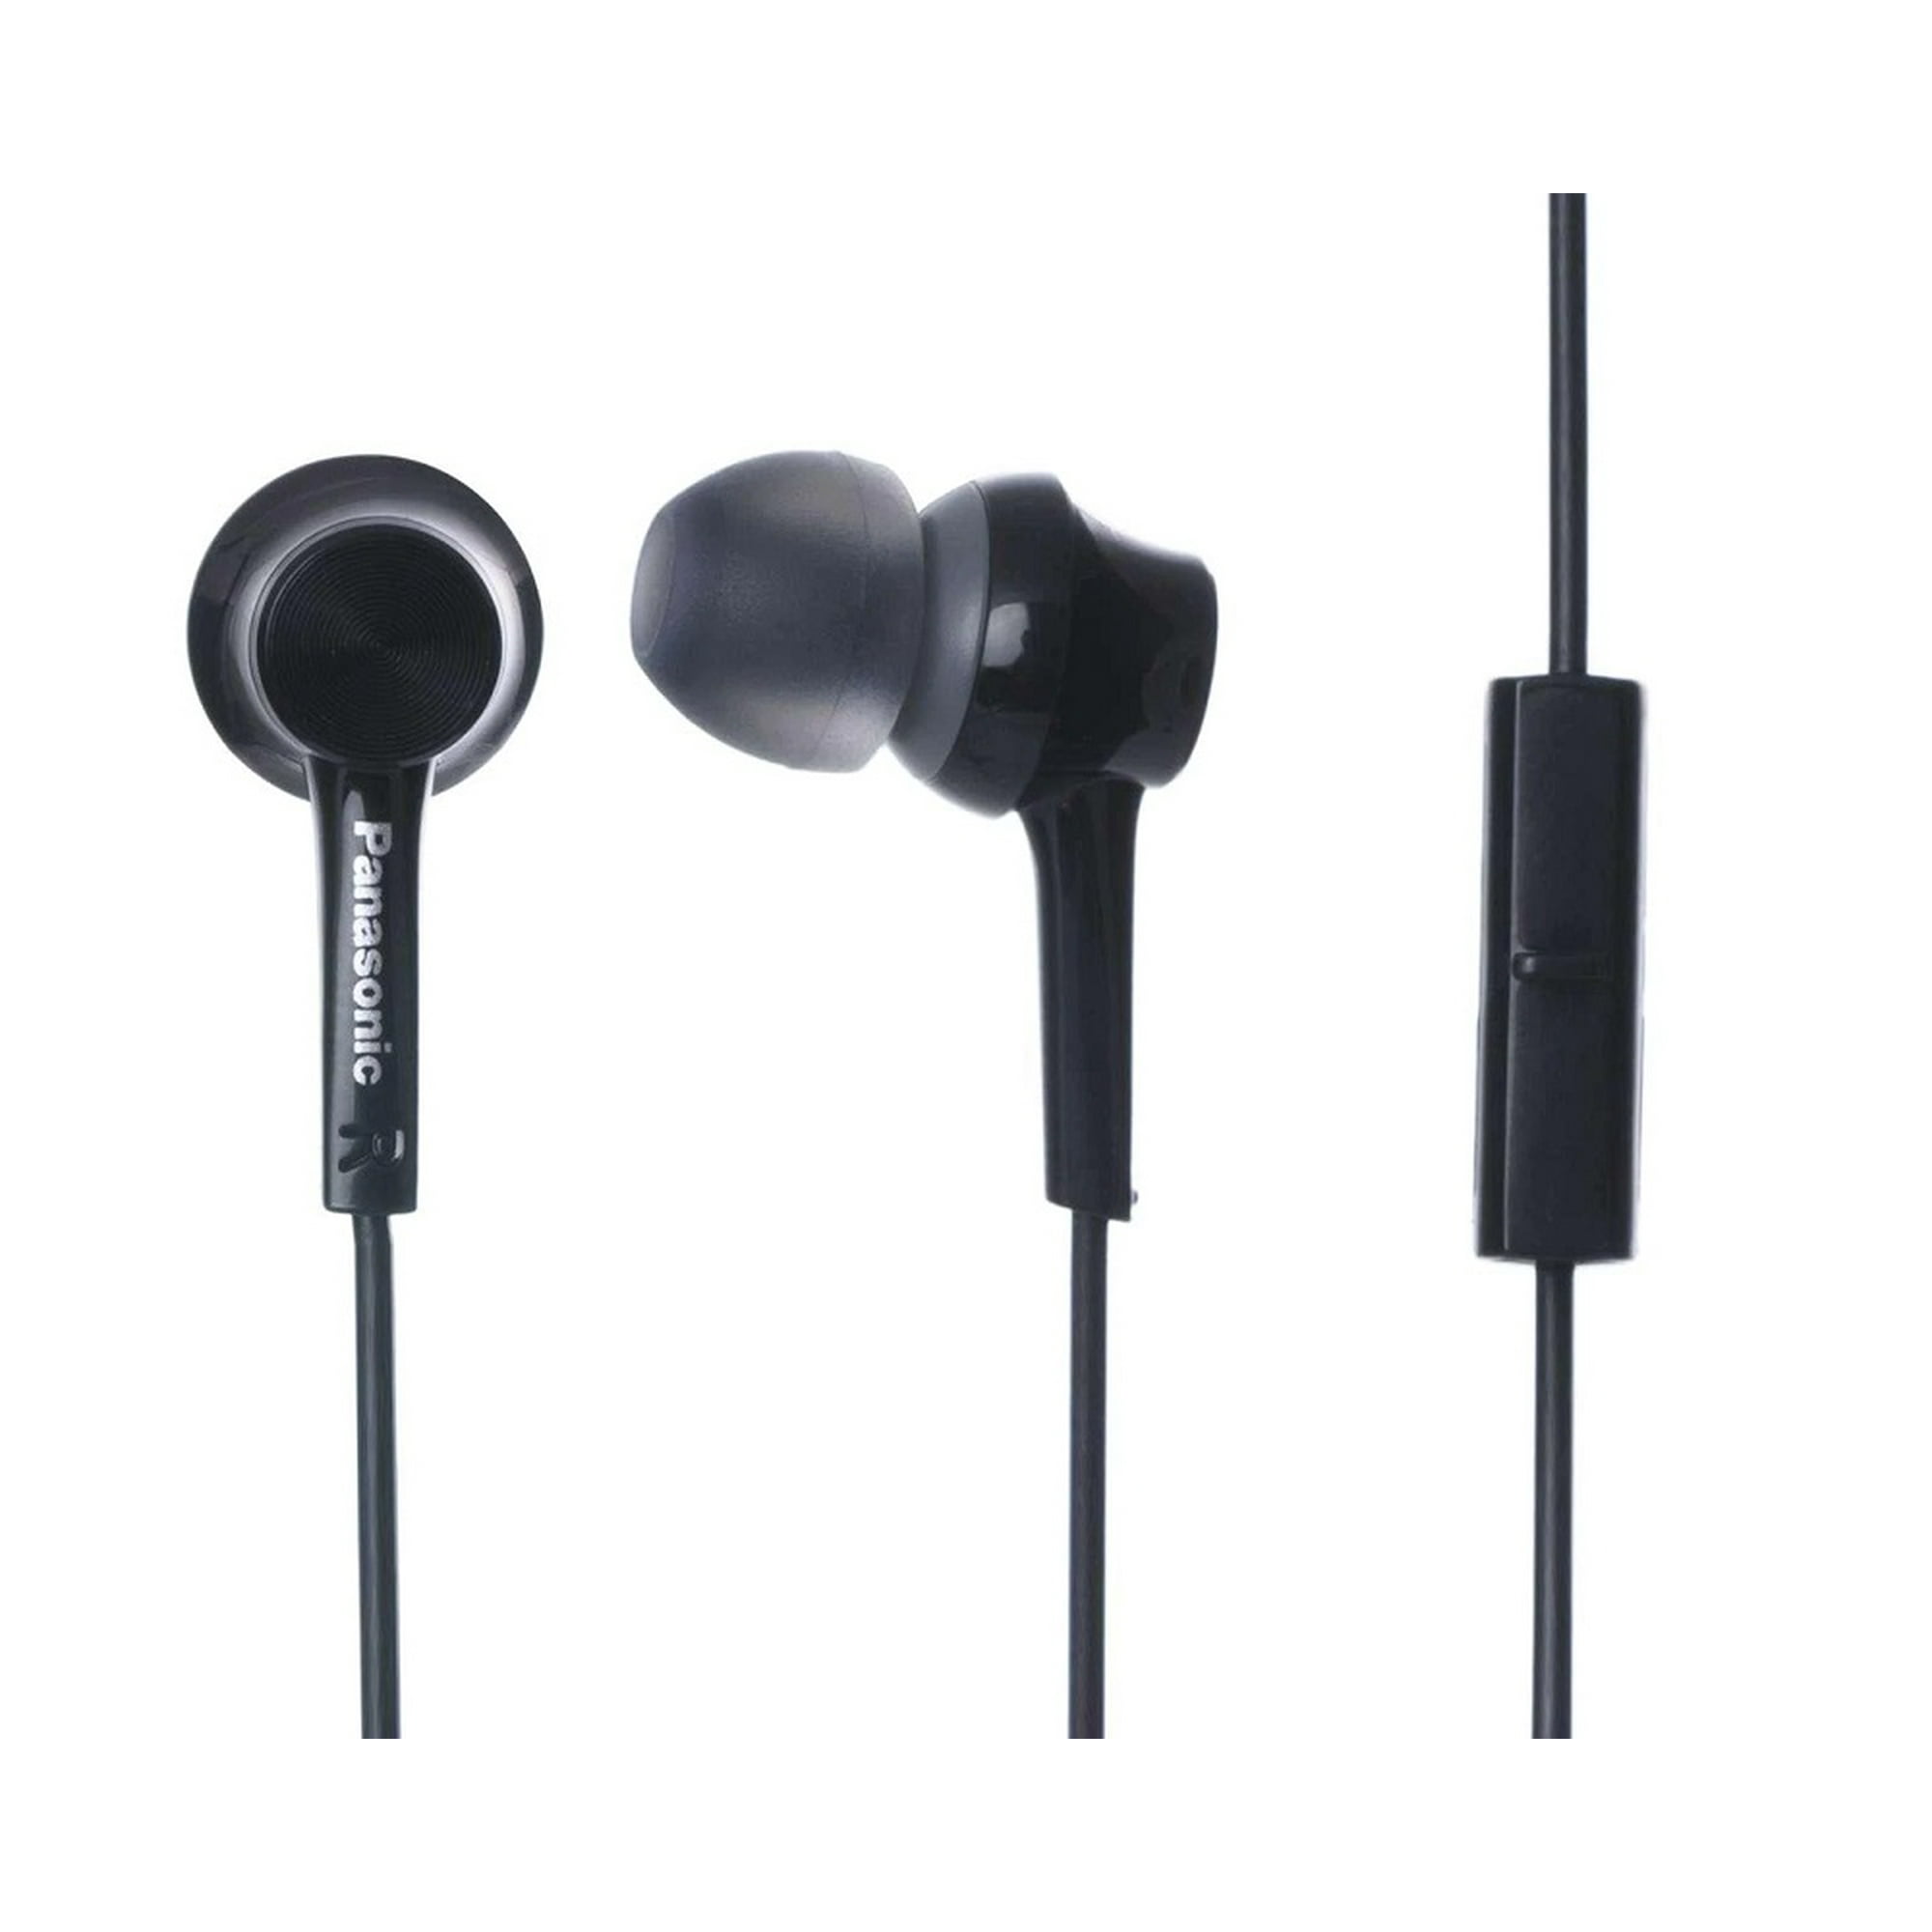 Audifonos Panasonic RP-TCM115 In Ear con Microfono Negro